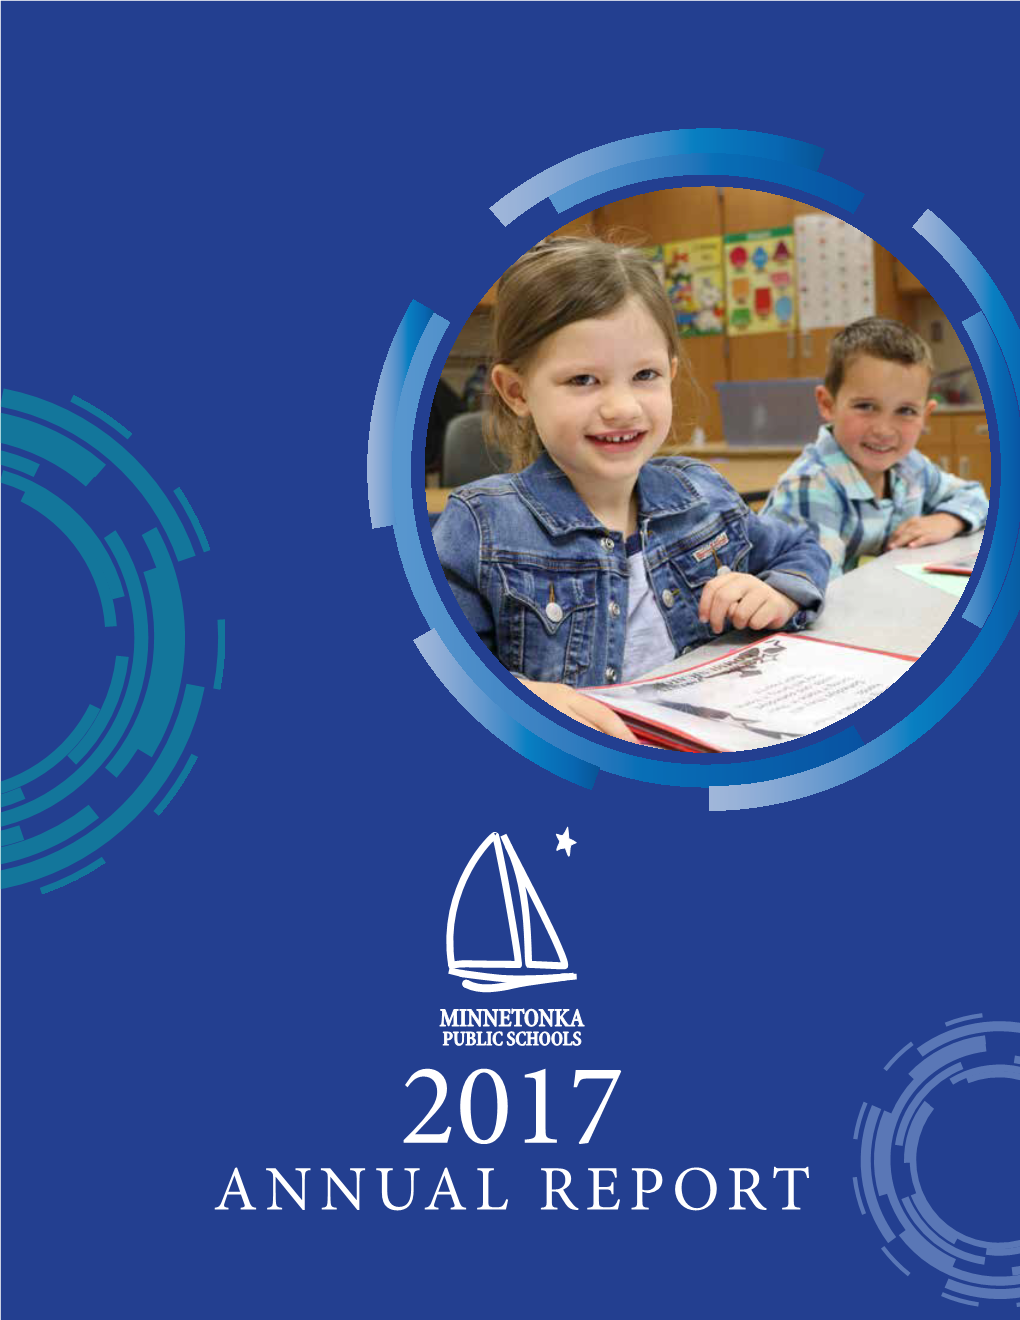 Annual Report Minnetonka Public Schools